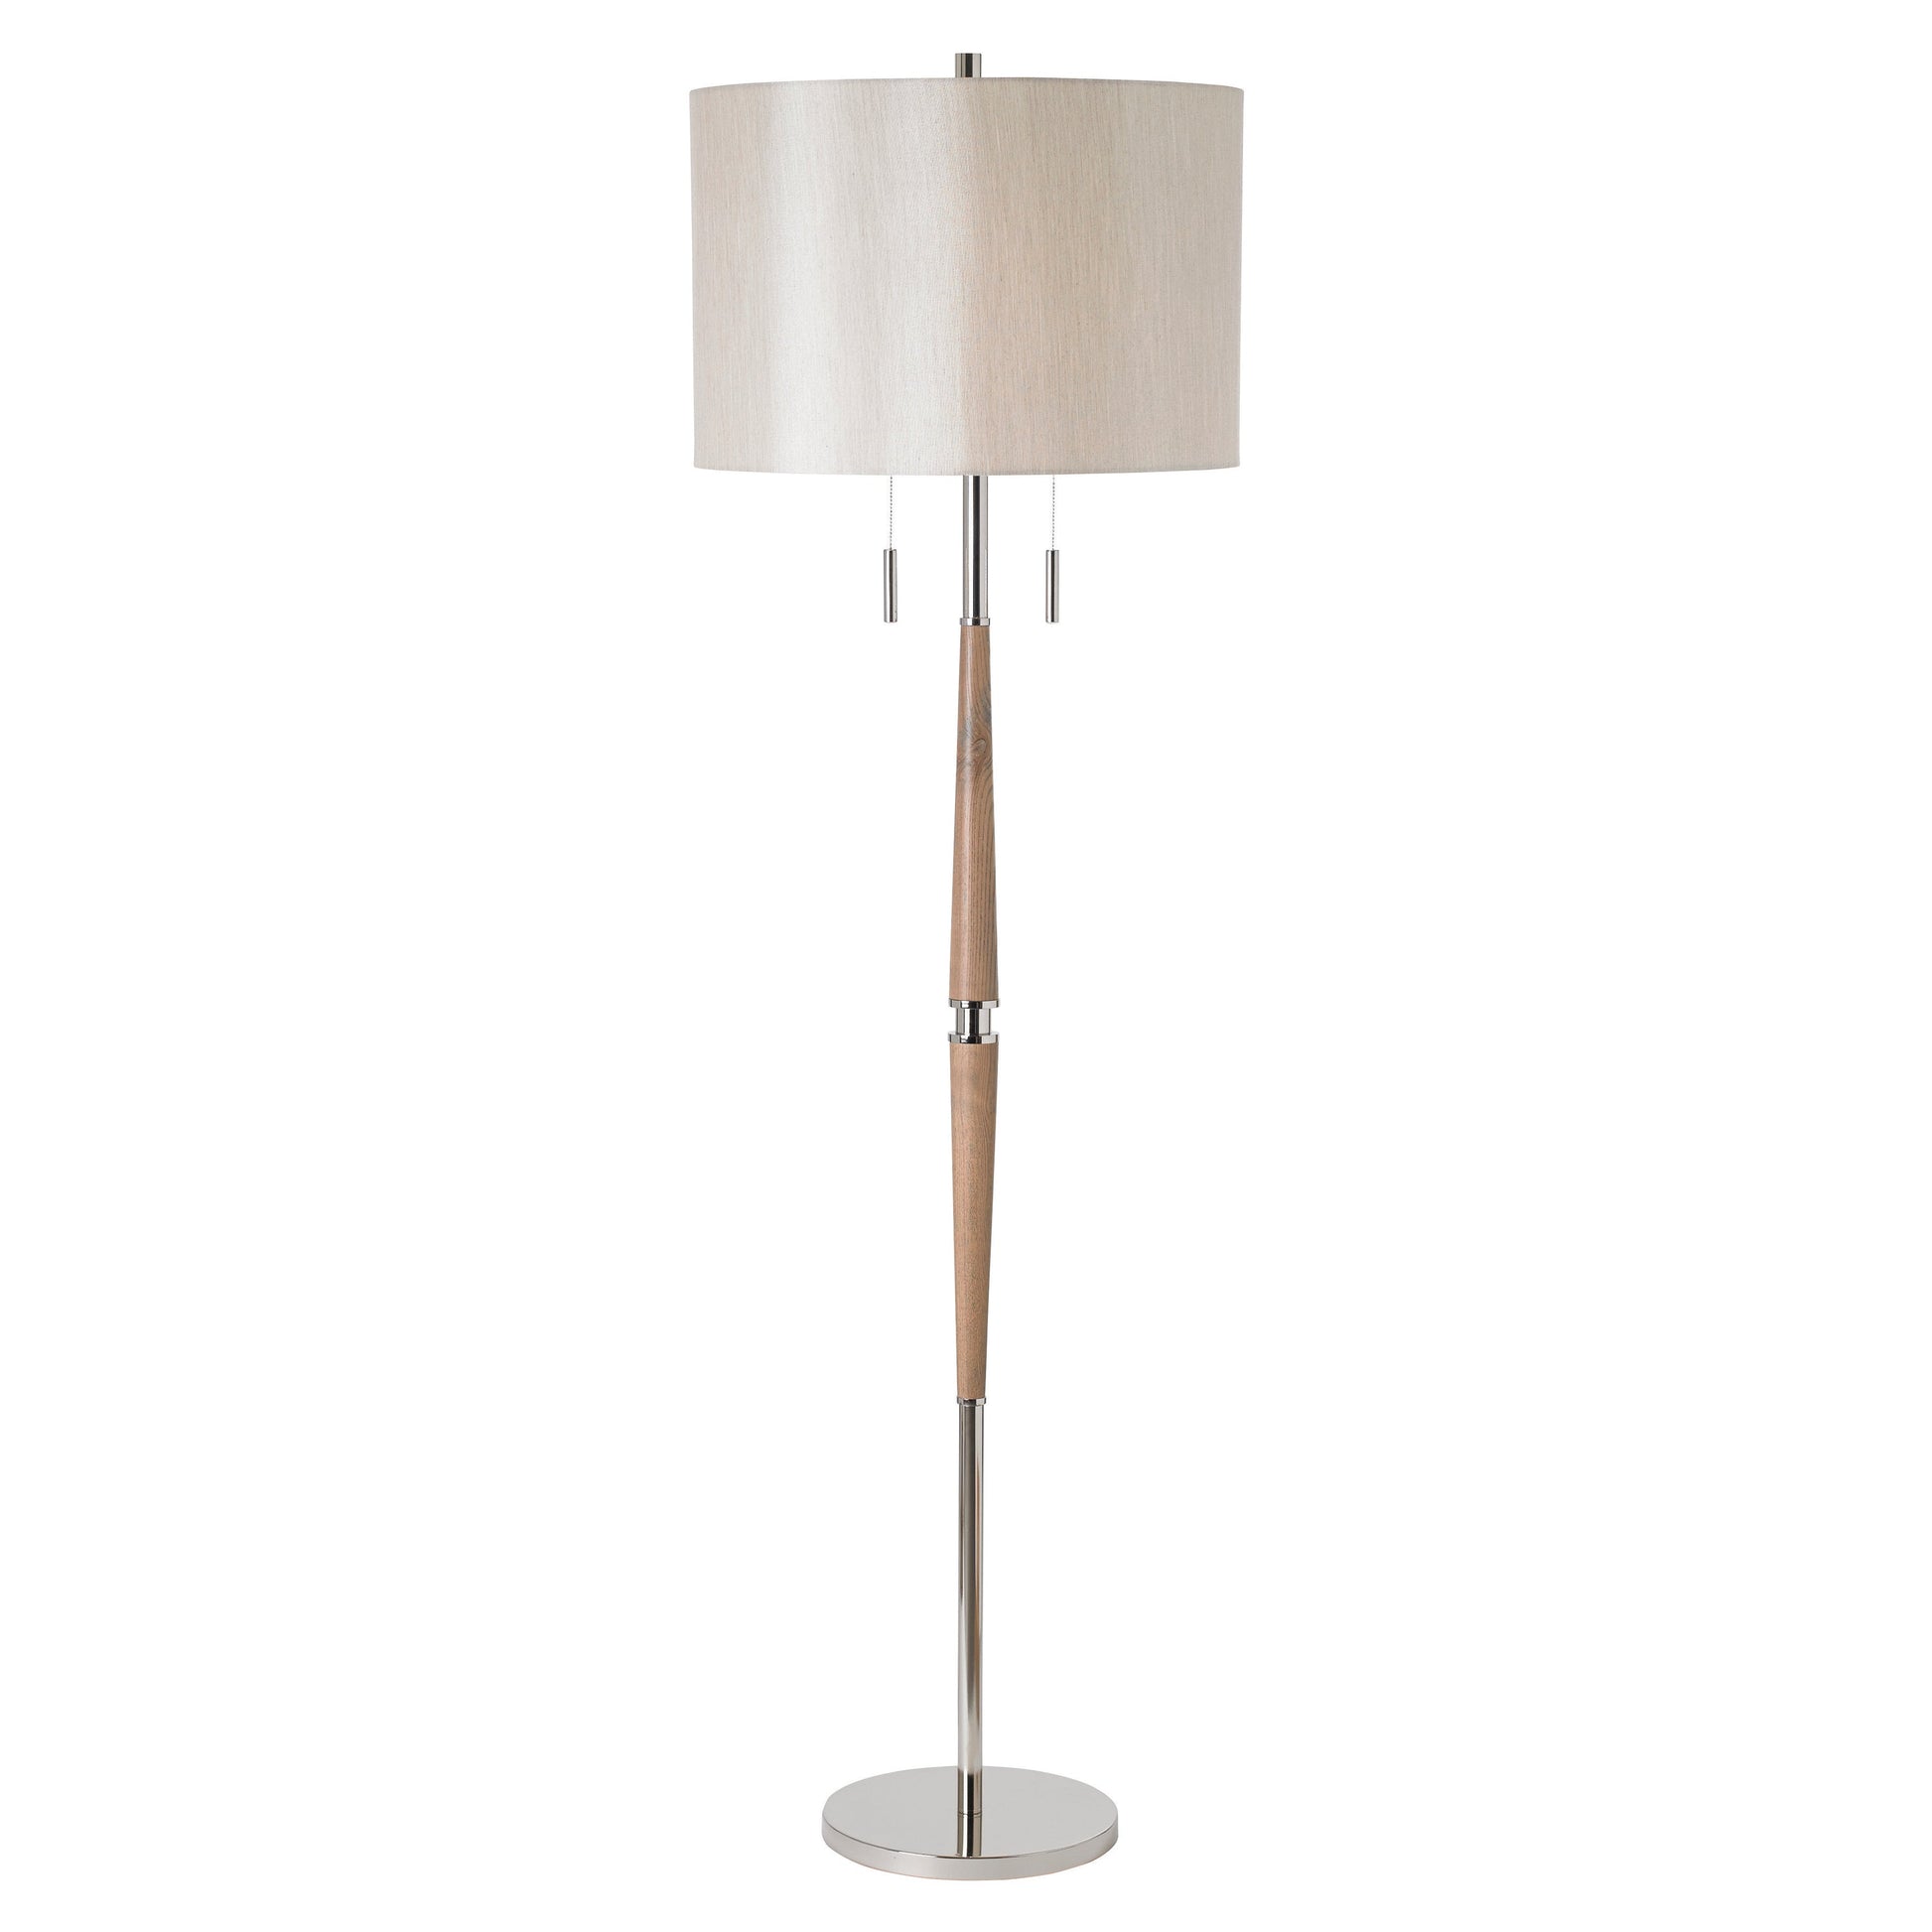 Burness 2 Light Lamp - Polished Nickel & Wood - 2 Way Control Lamp